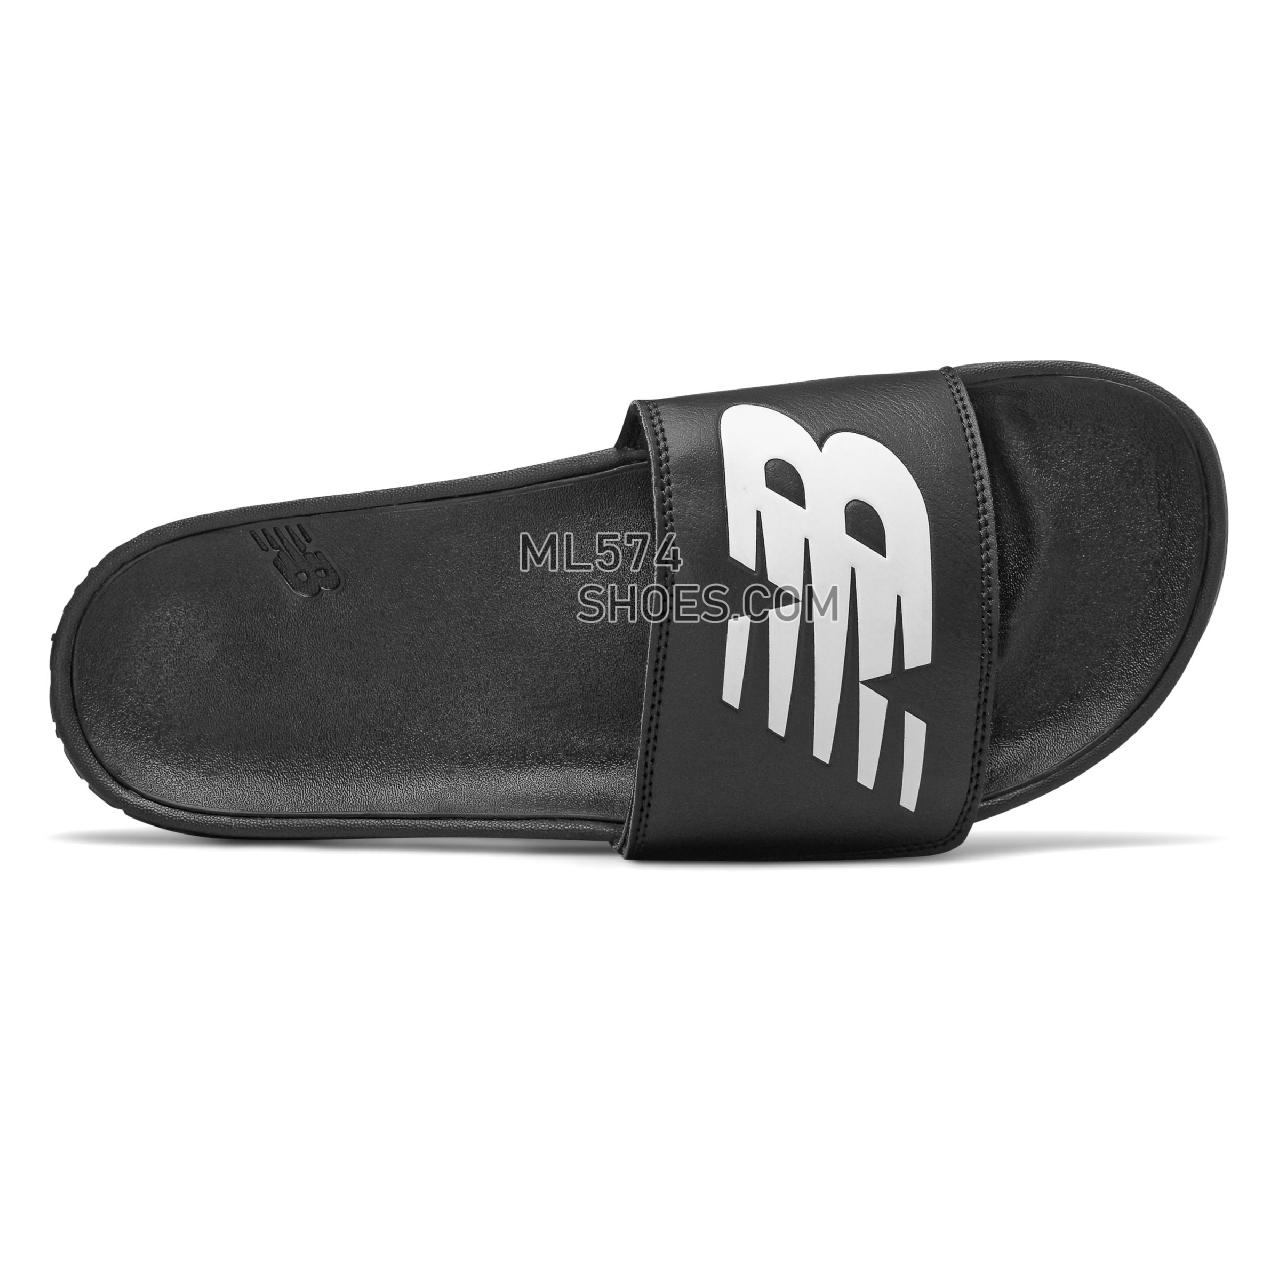 New Balance 200 Adjustable - Men's Flip Flops - Black with White - SMA200B1